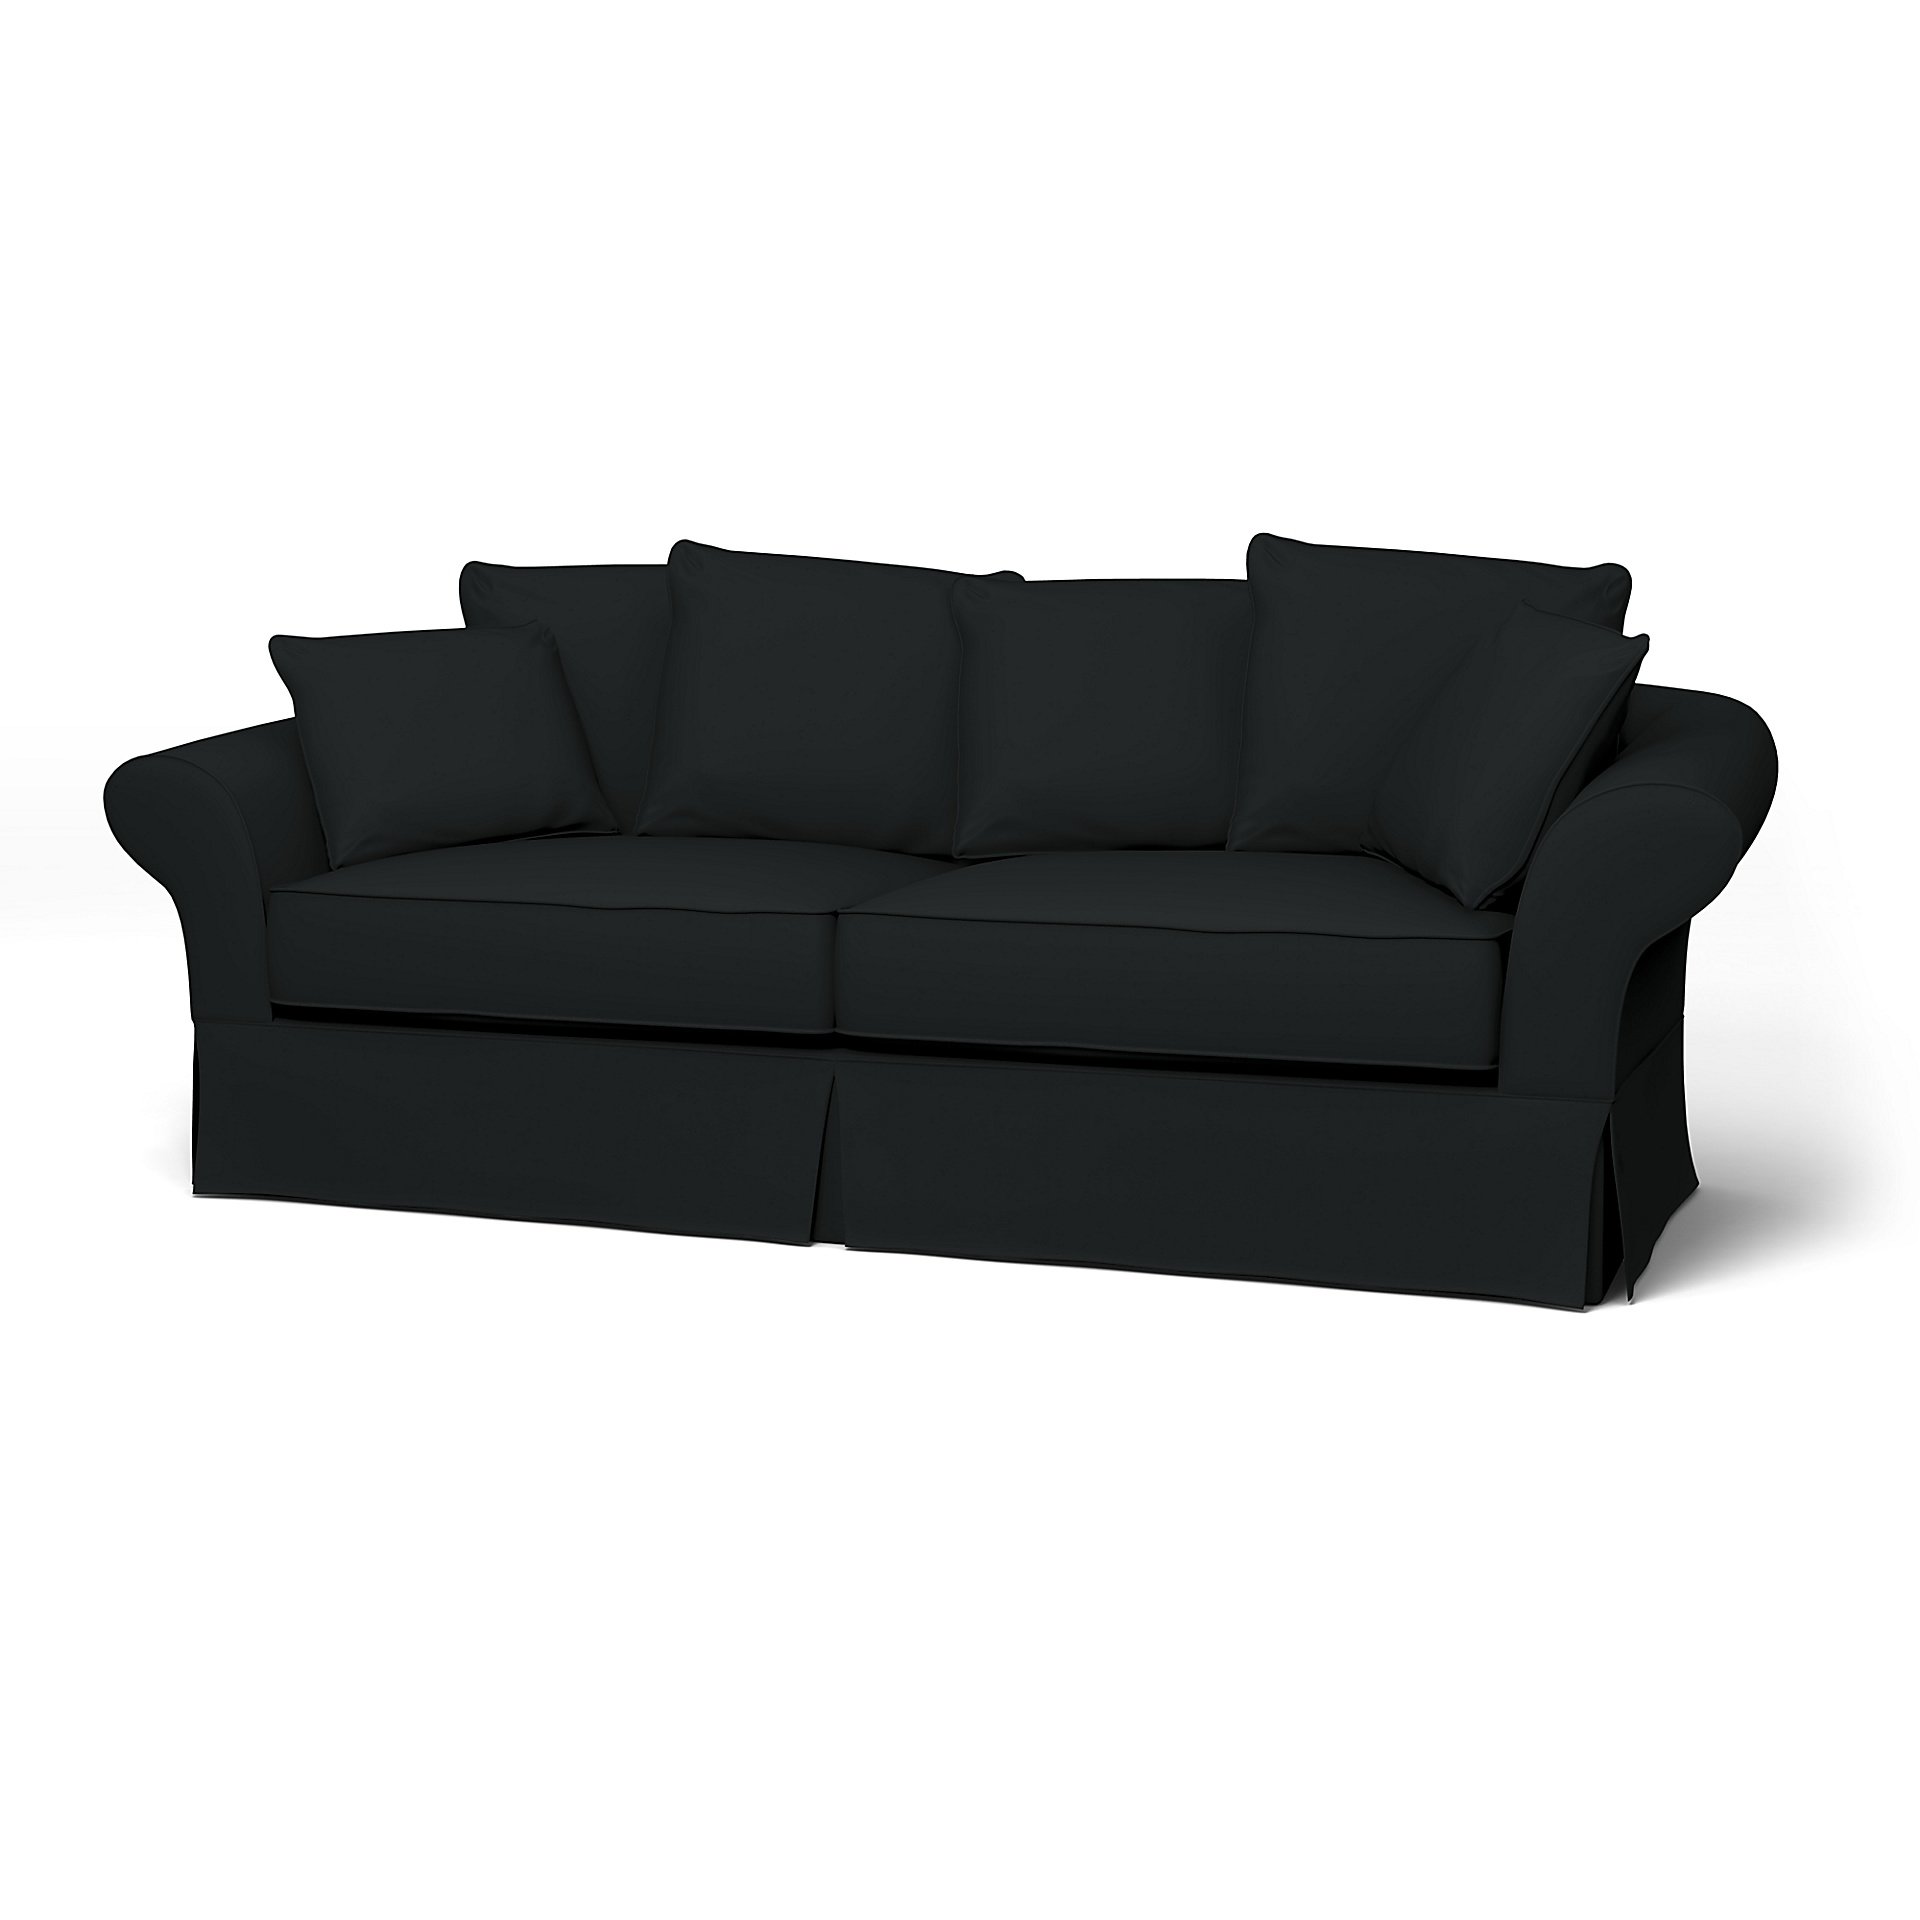 IKEA - Backamo 3 Seater Sofa Cover, Jet Black, Cotton - Bemz